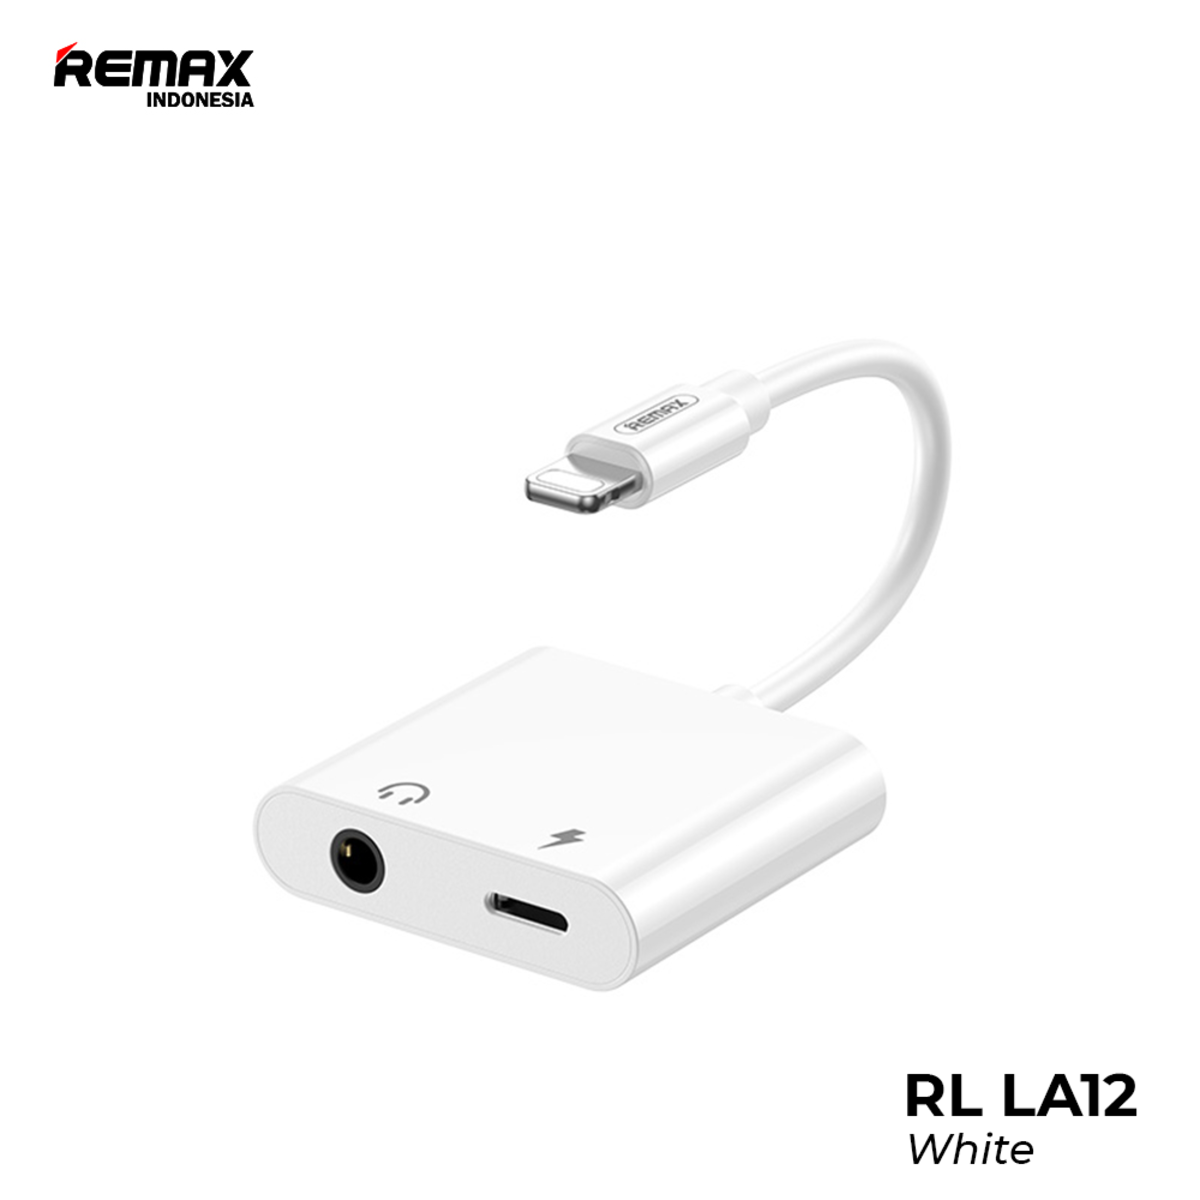 Remax Connector RL-LA12 Wht